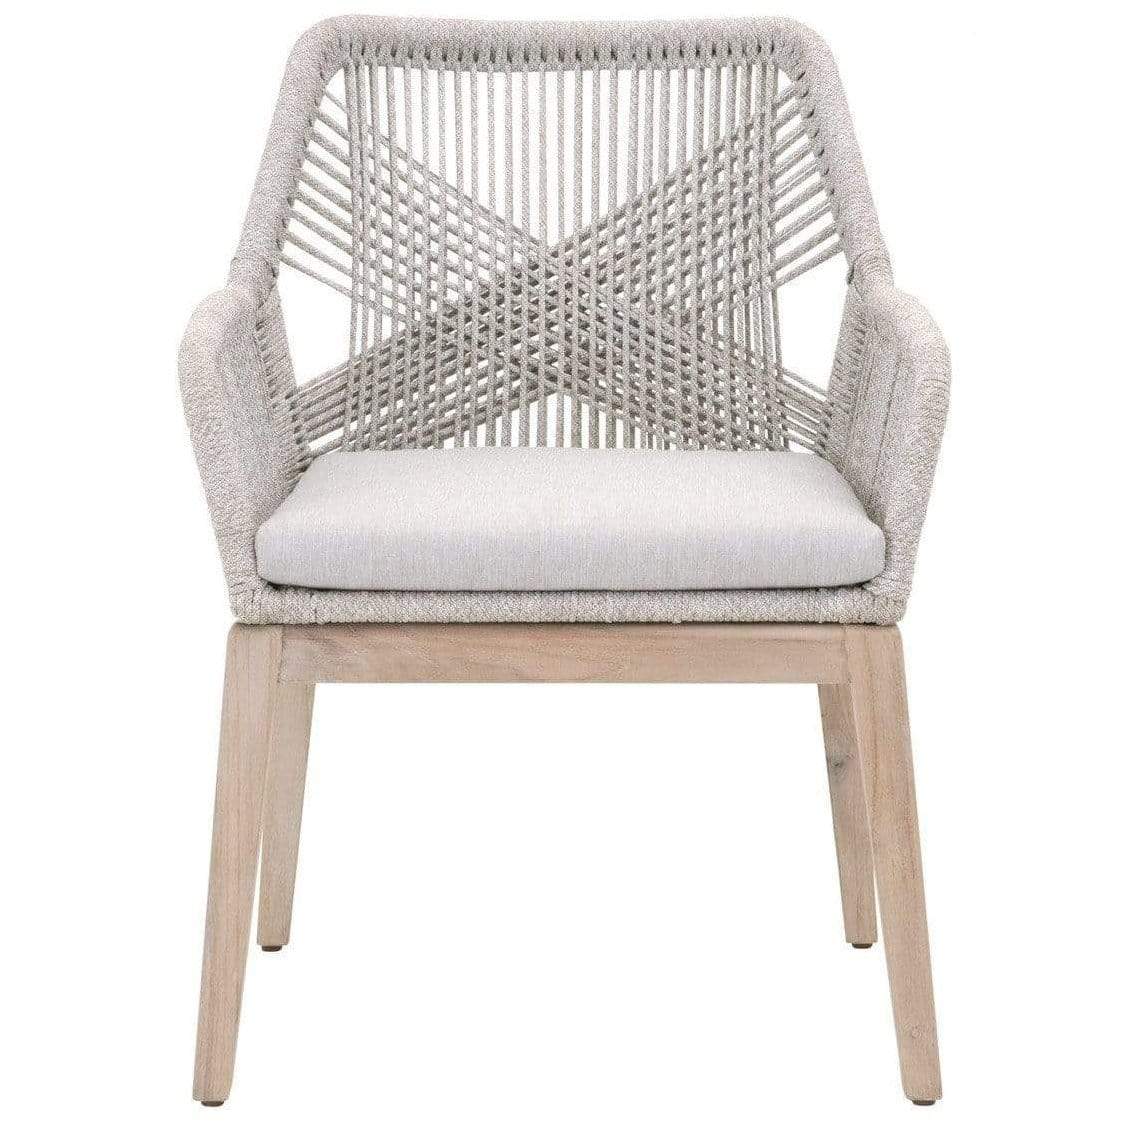 BLU Home Loom Outdoor Dining Chair - Platinum (Set of 2) Furniture orient-express-6809KD.WTA/PUM/GT 842279146559